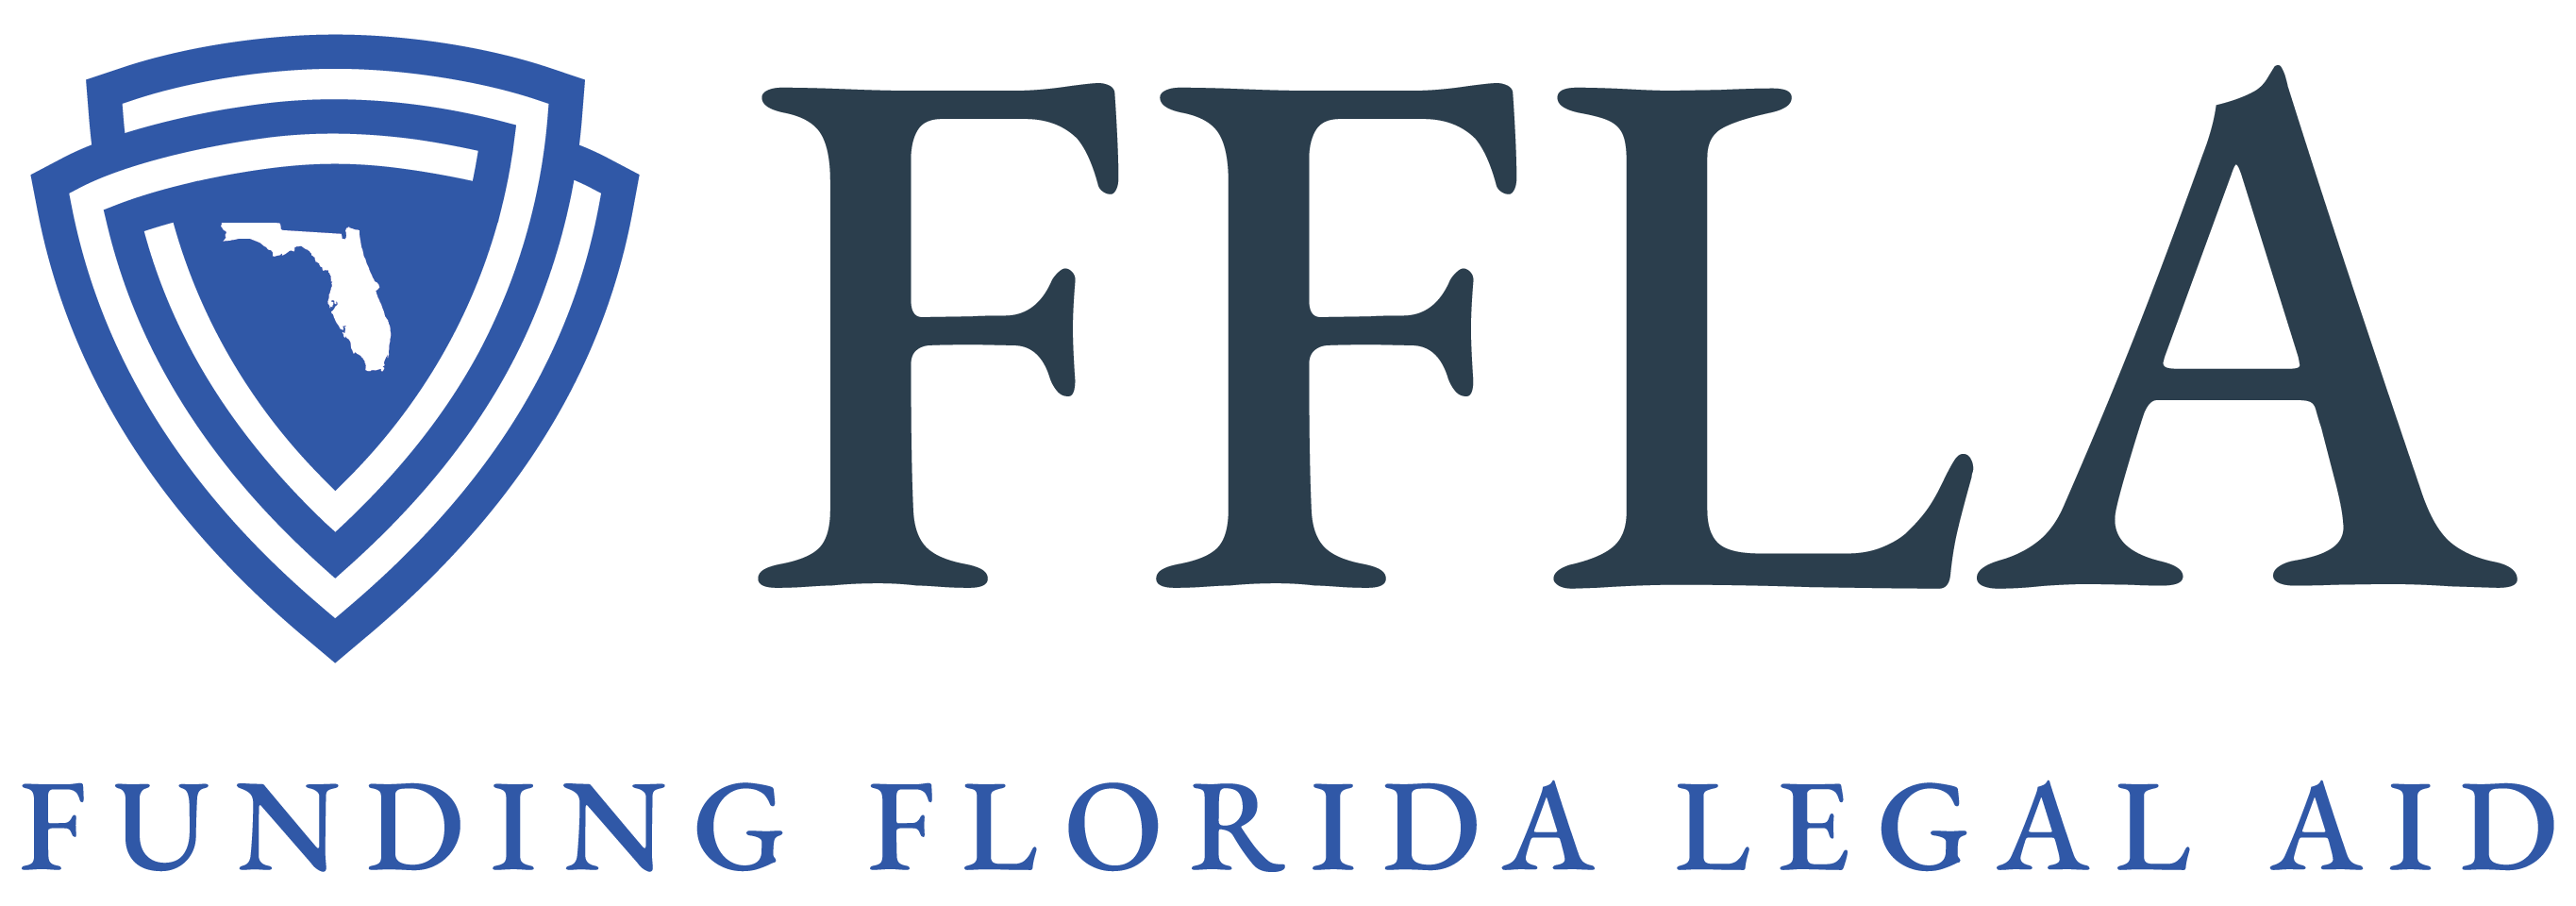 Funding Florida Legal Fund